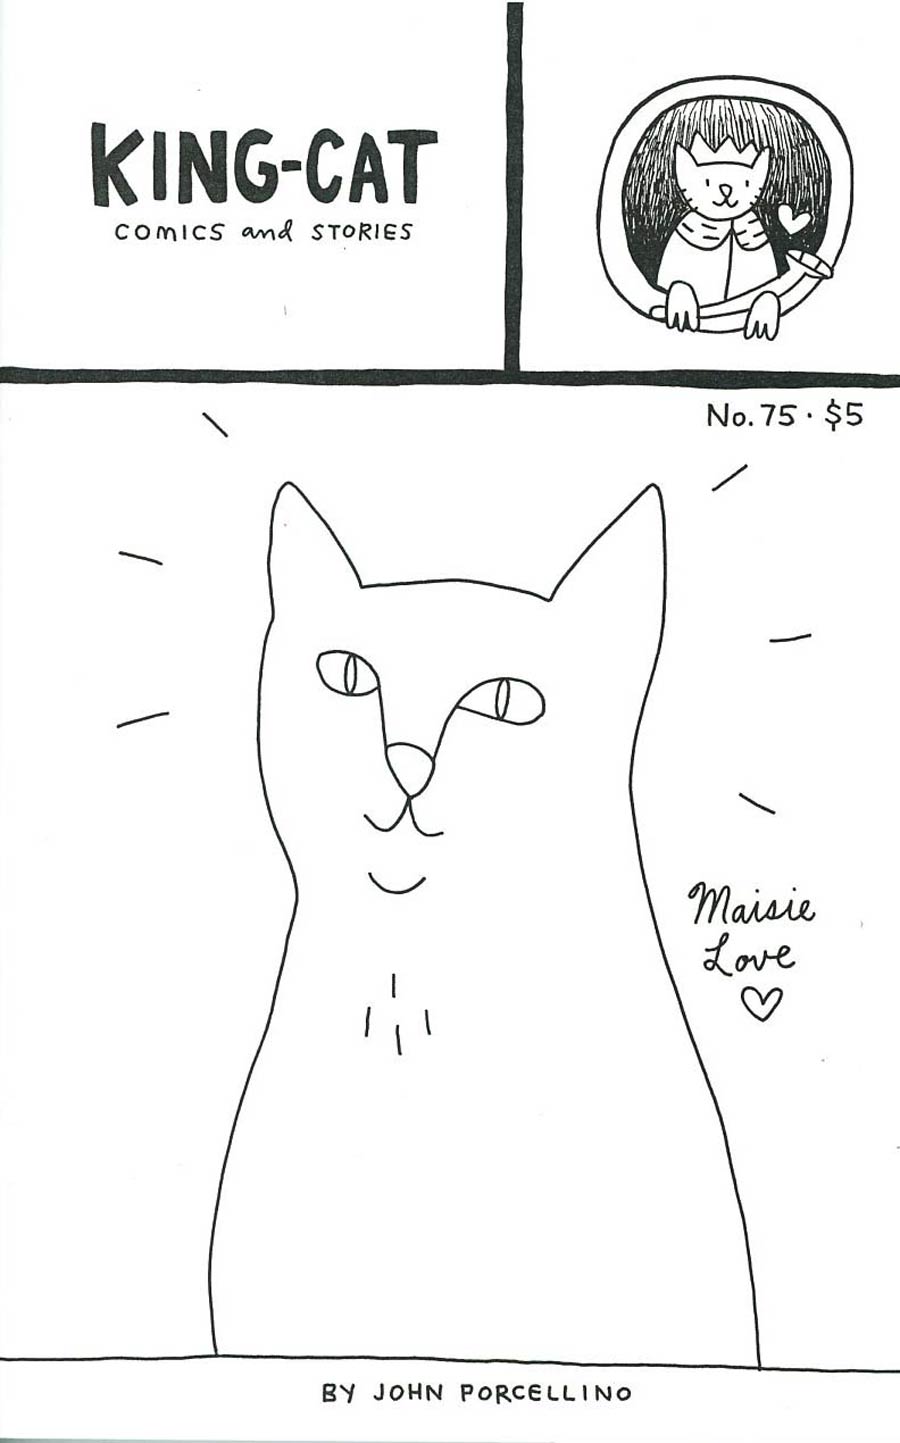 King-Cat Comics And Stories #75